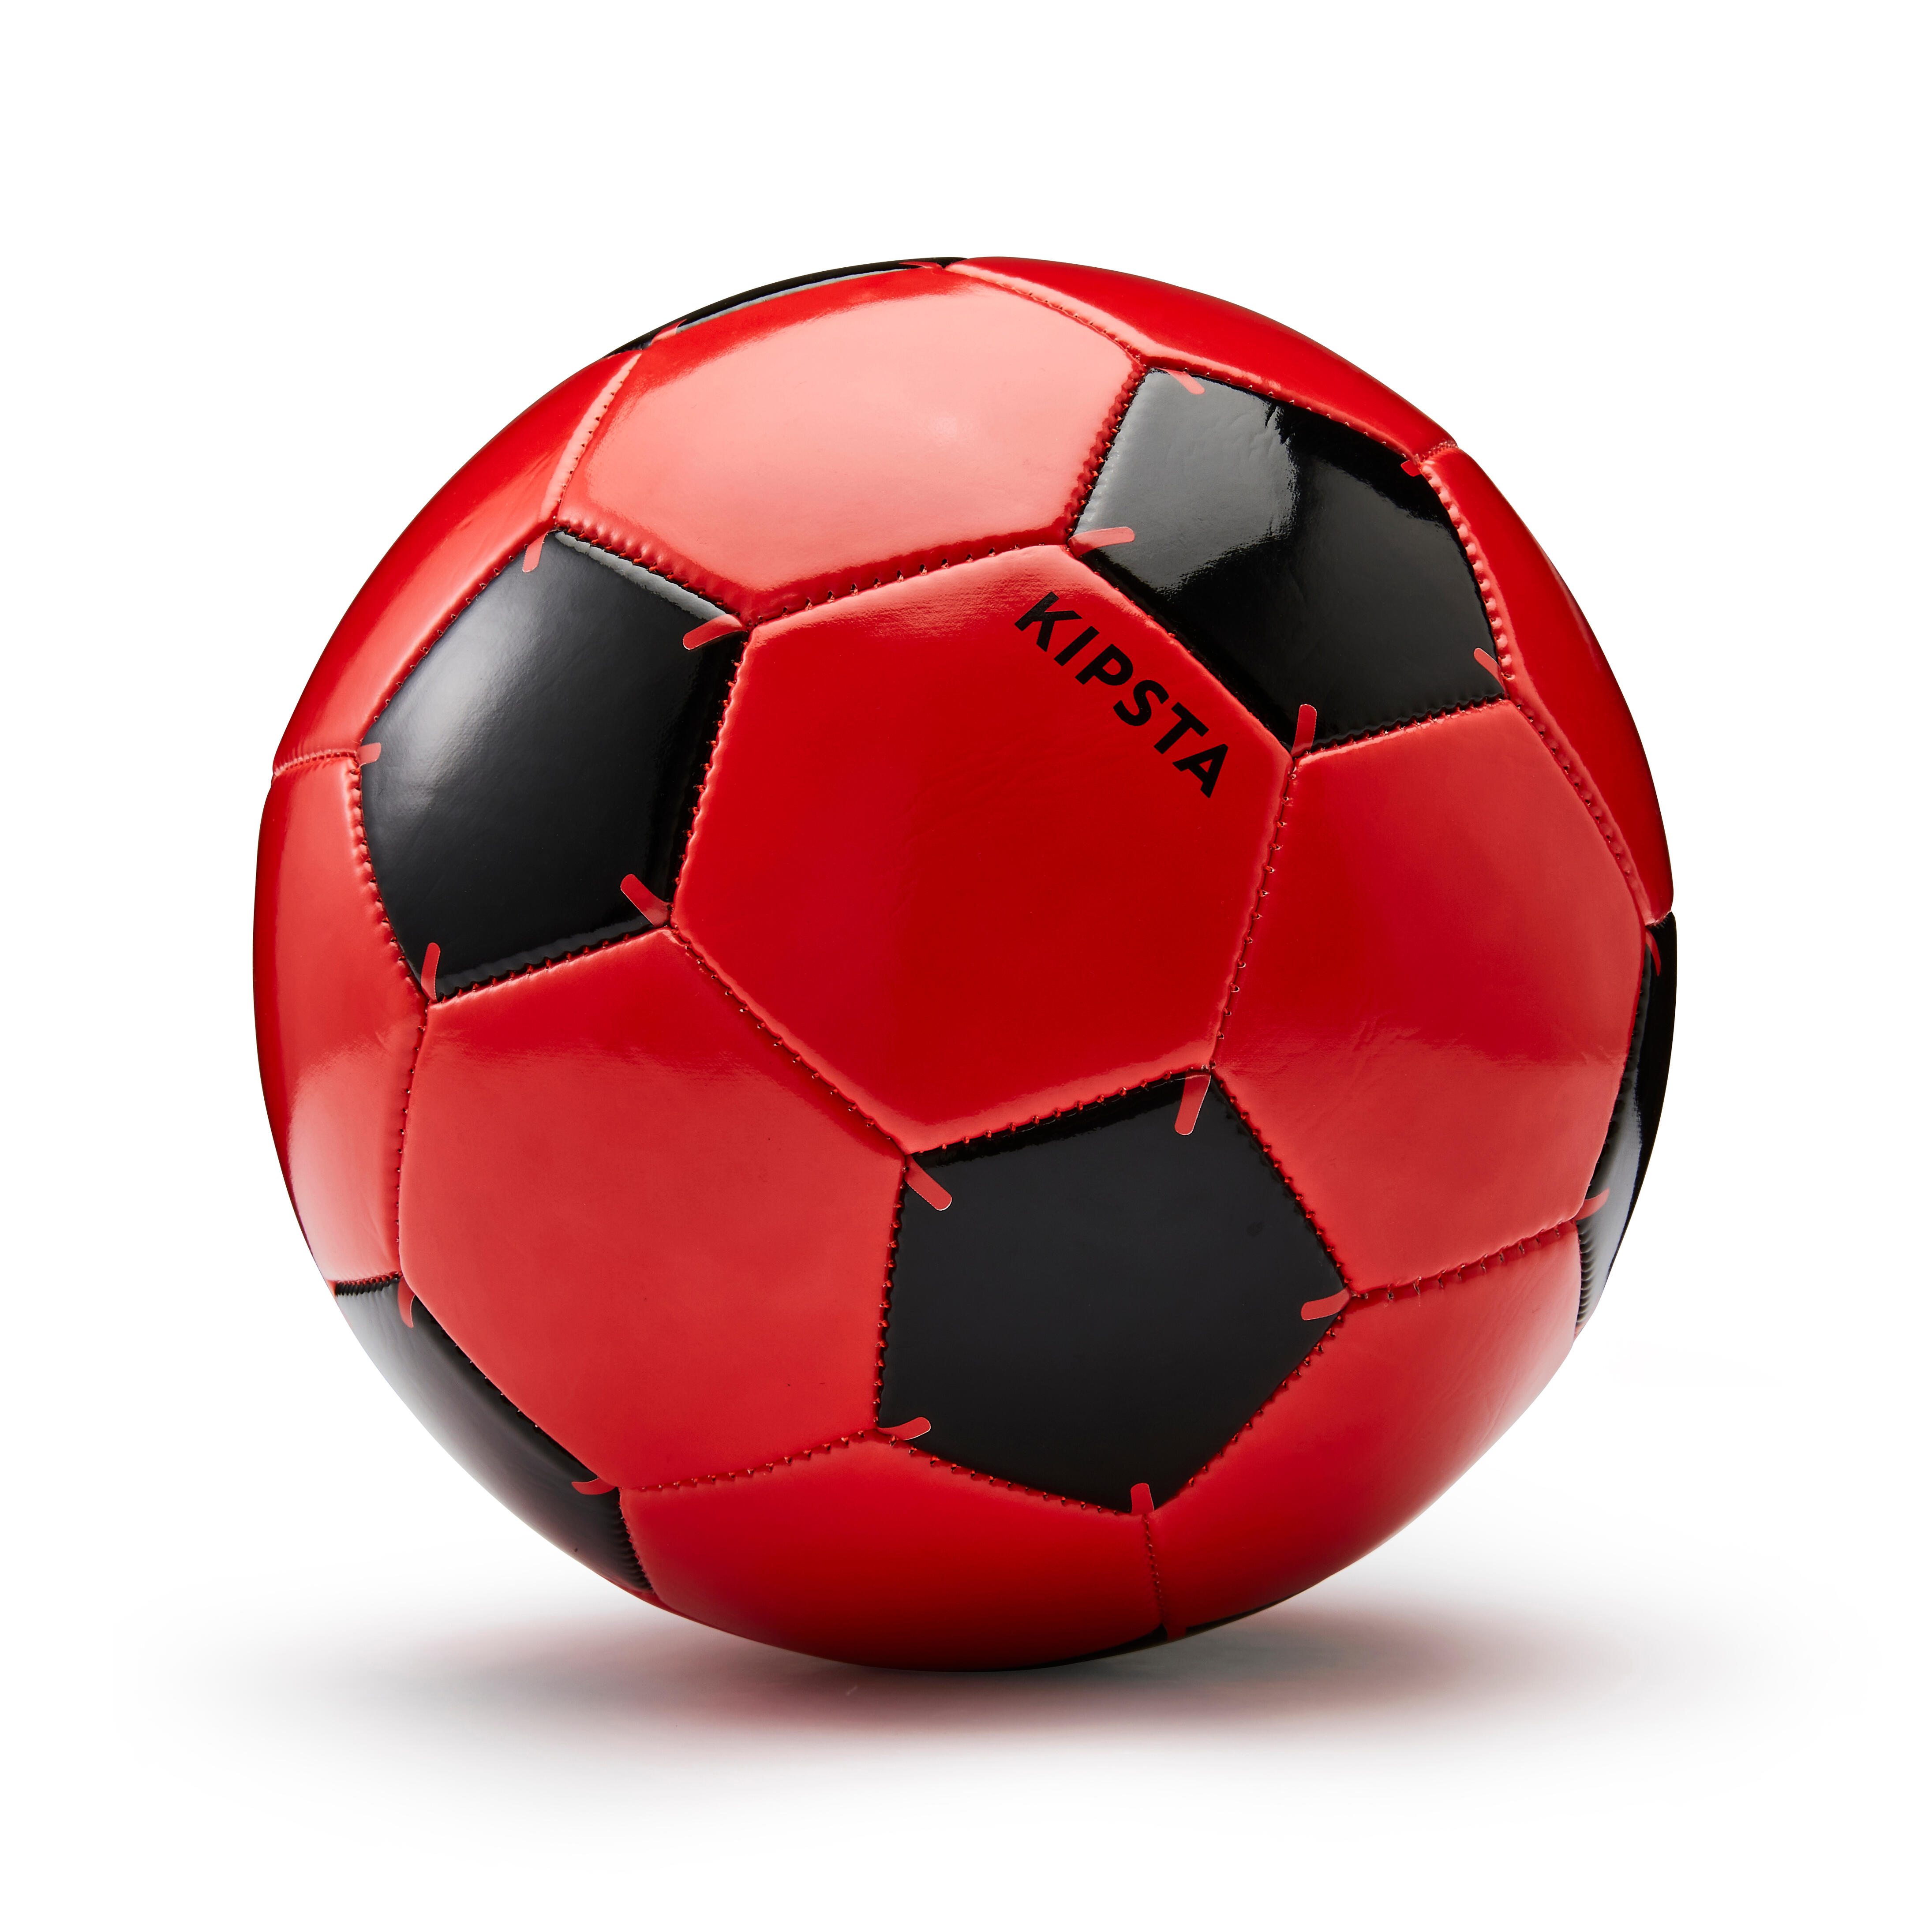 Kids' Size 4 Soccer Ball - First Kick Red